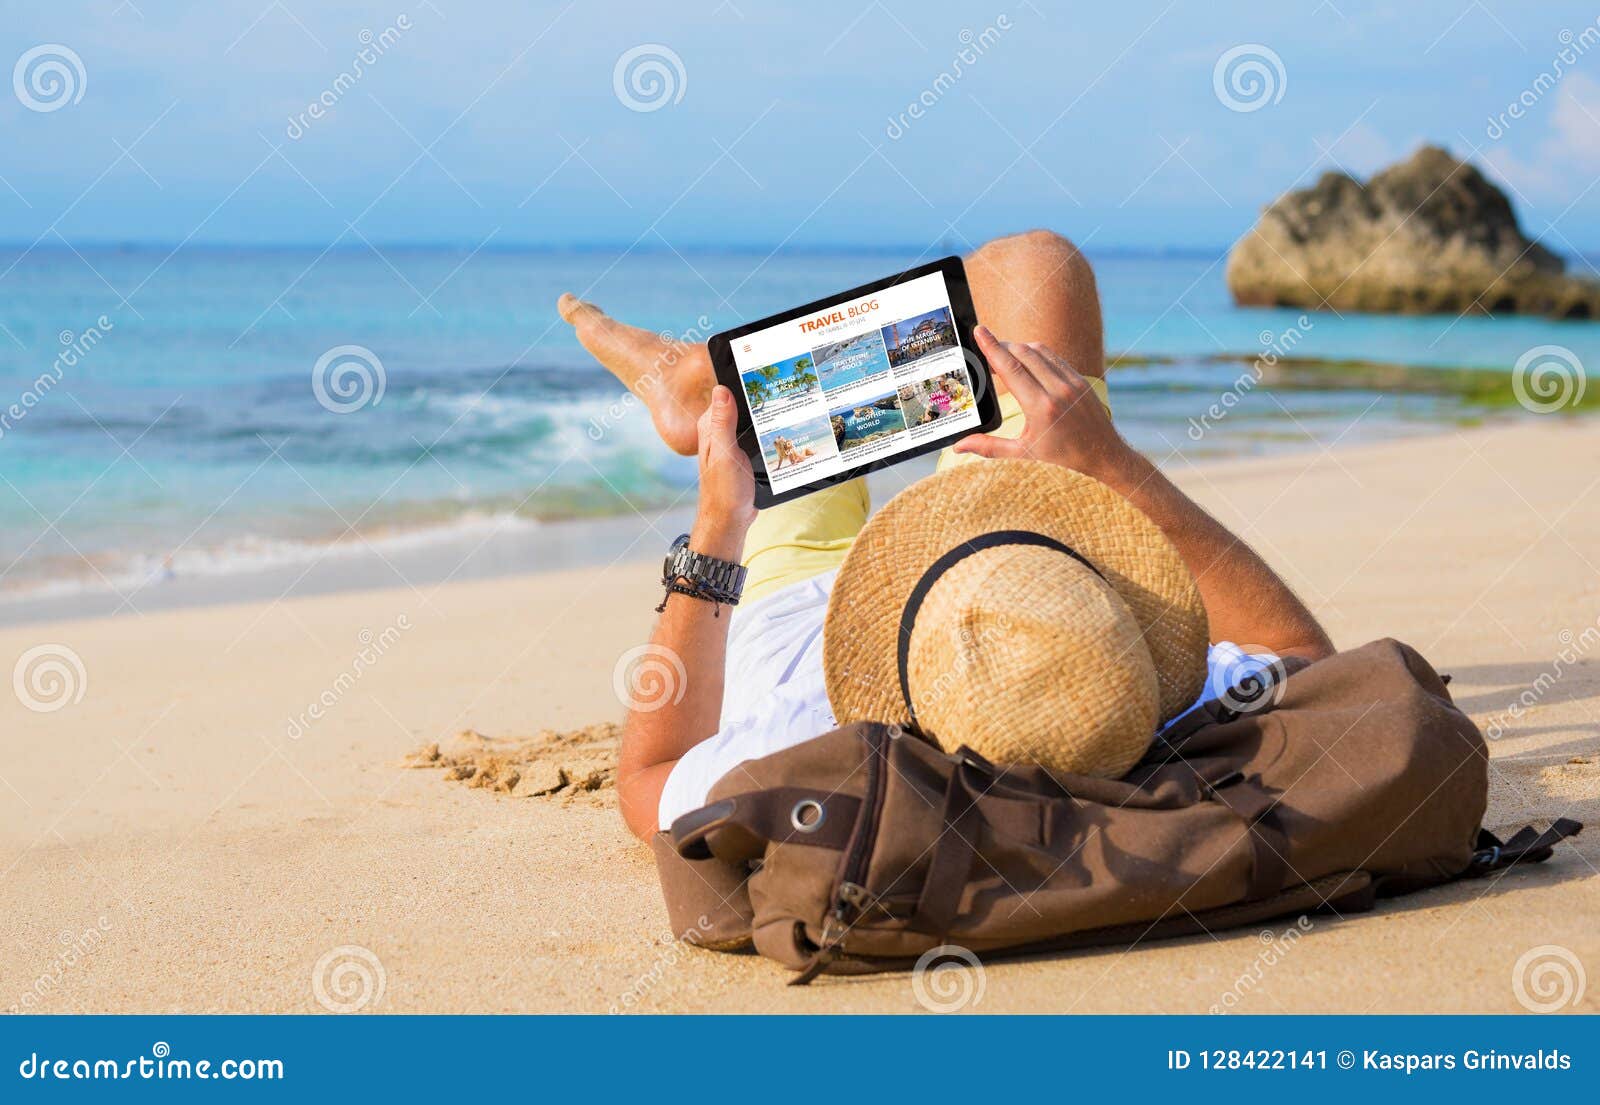 man reading travel blog on beach